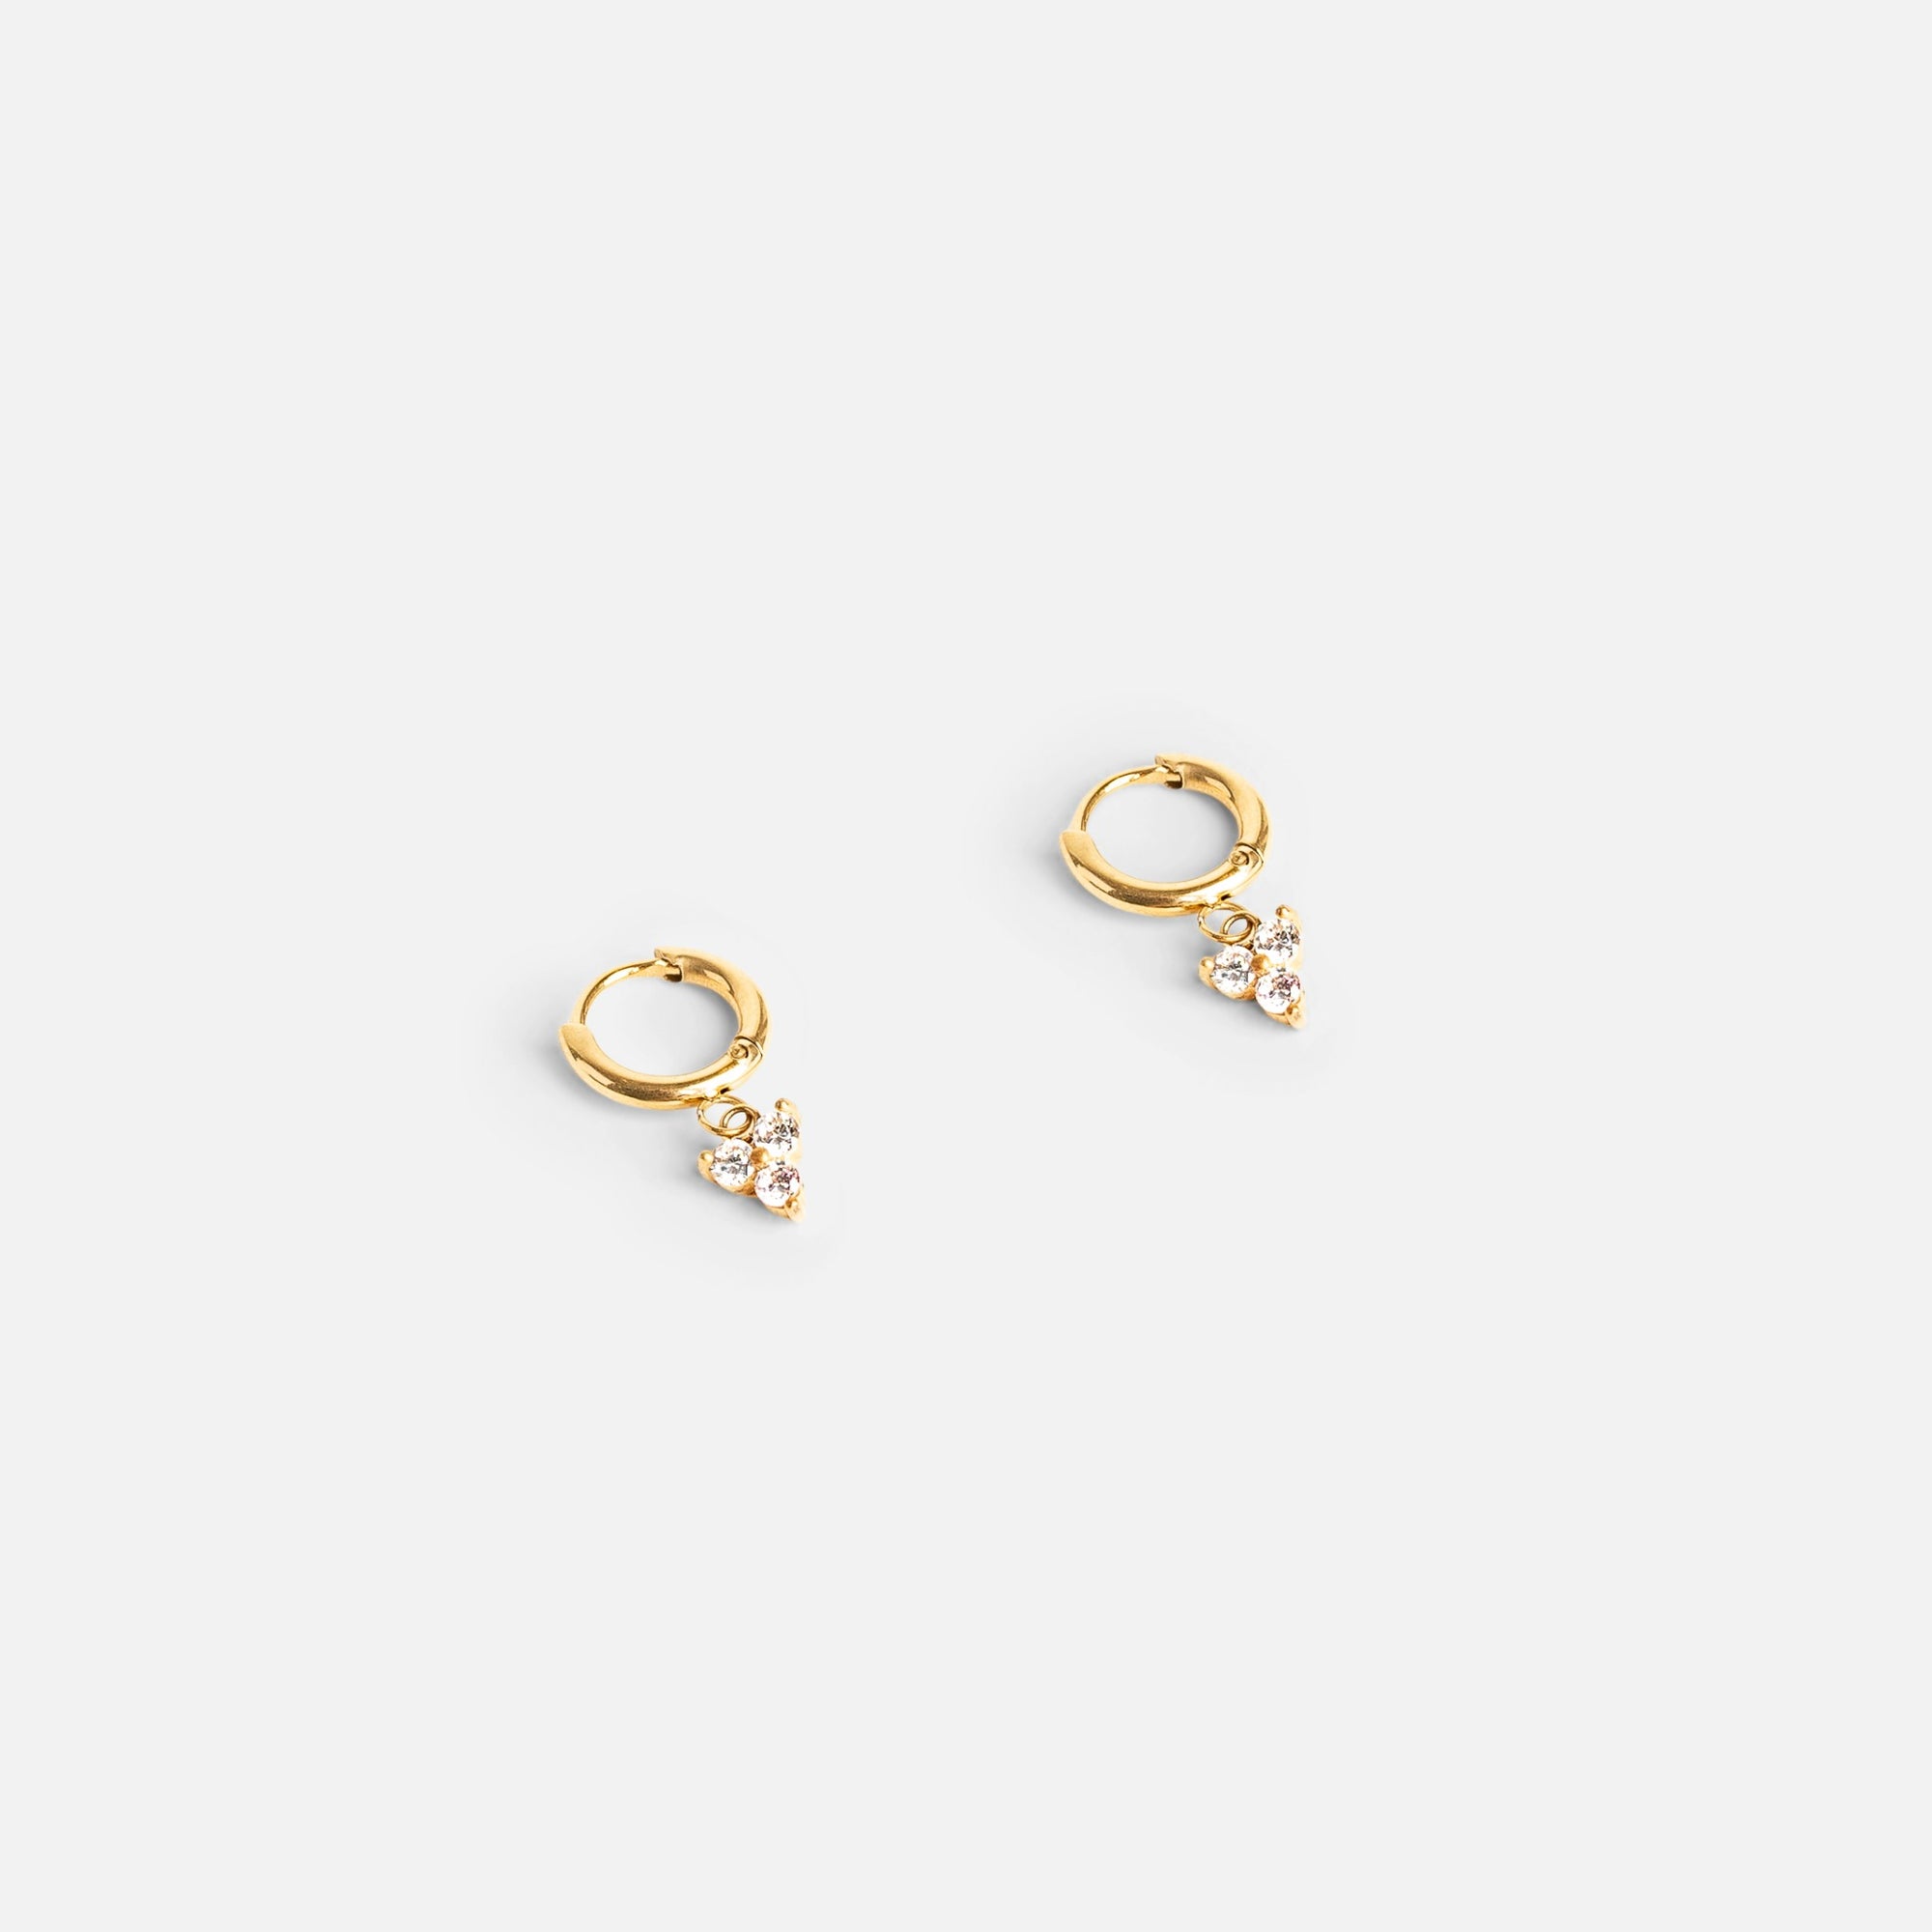 Mini golden hoop earrings with three cubic zirconia in stainless steel